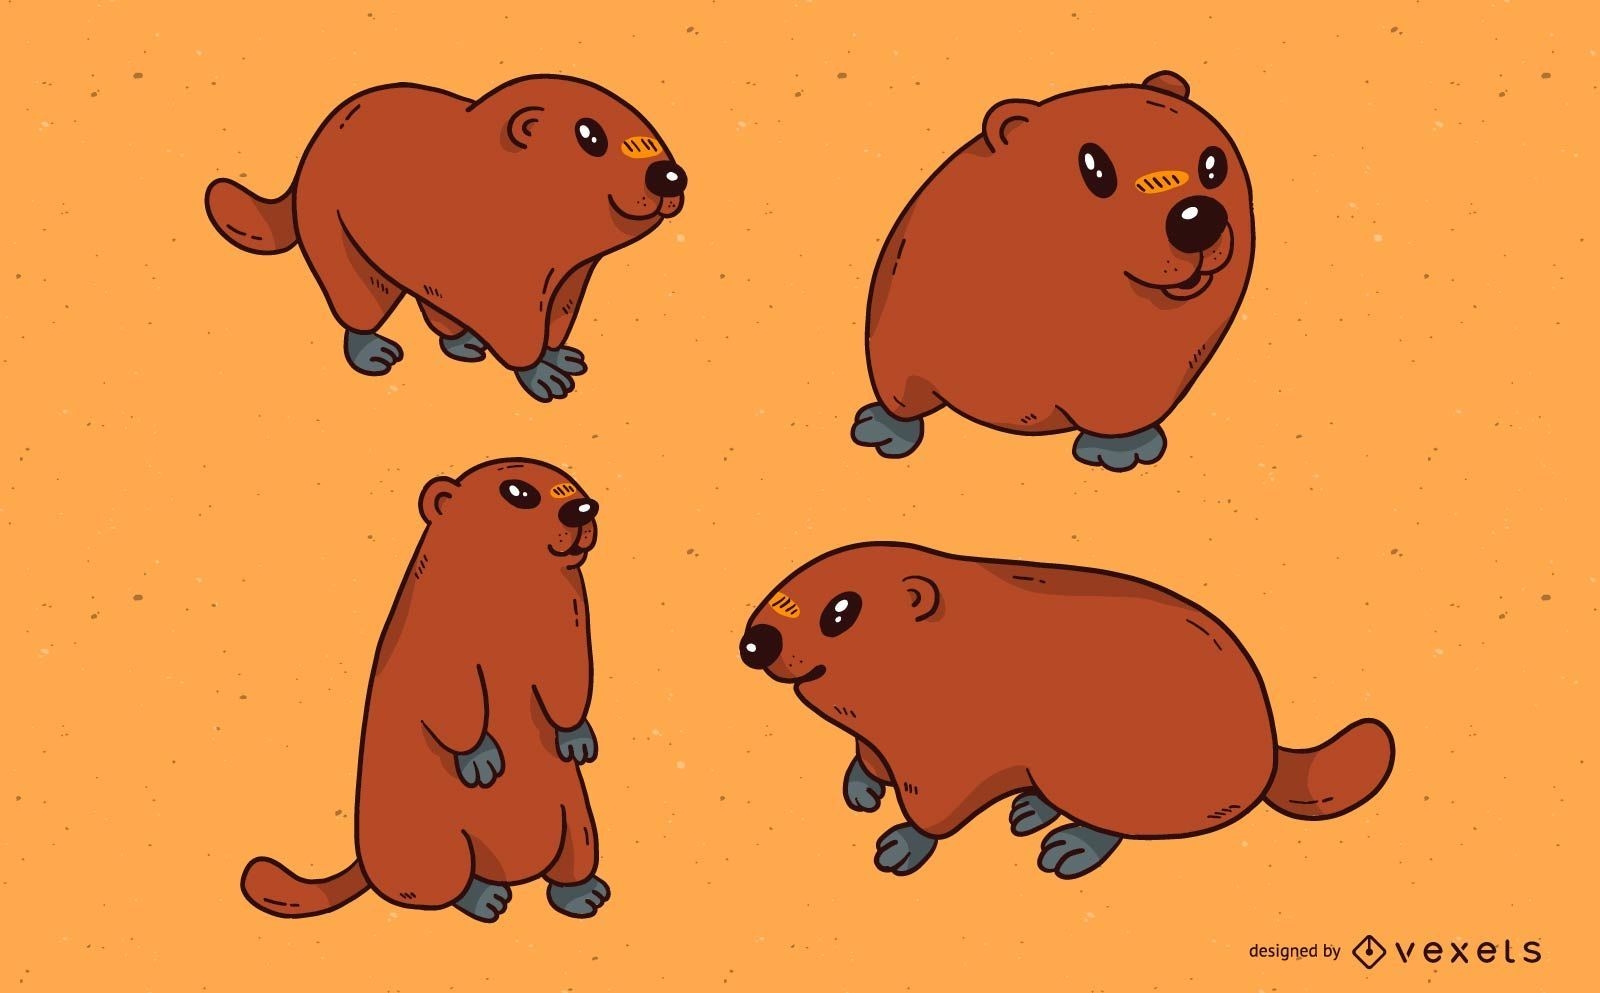 Cute groundhog illustration set